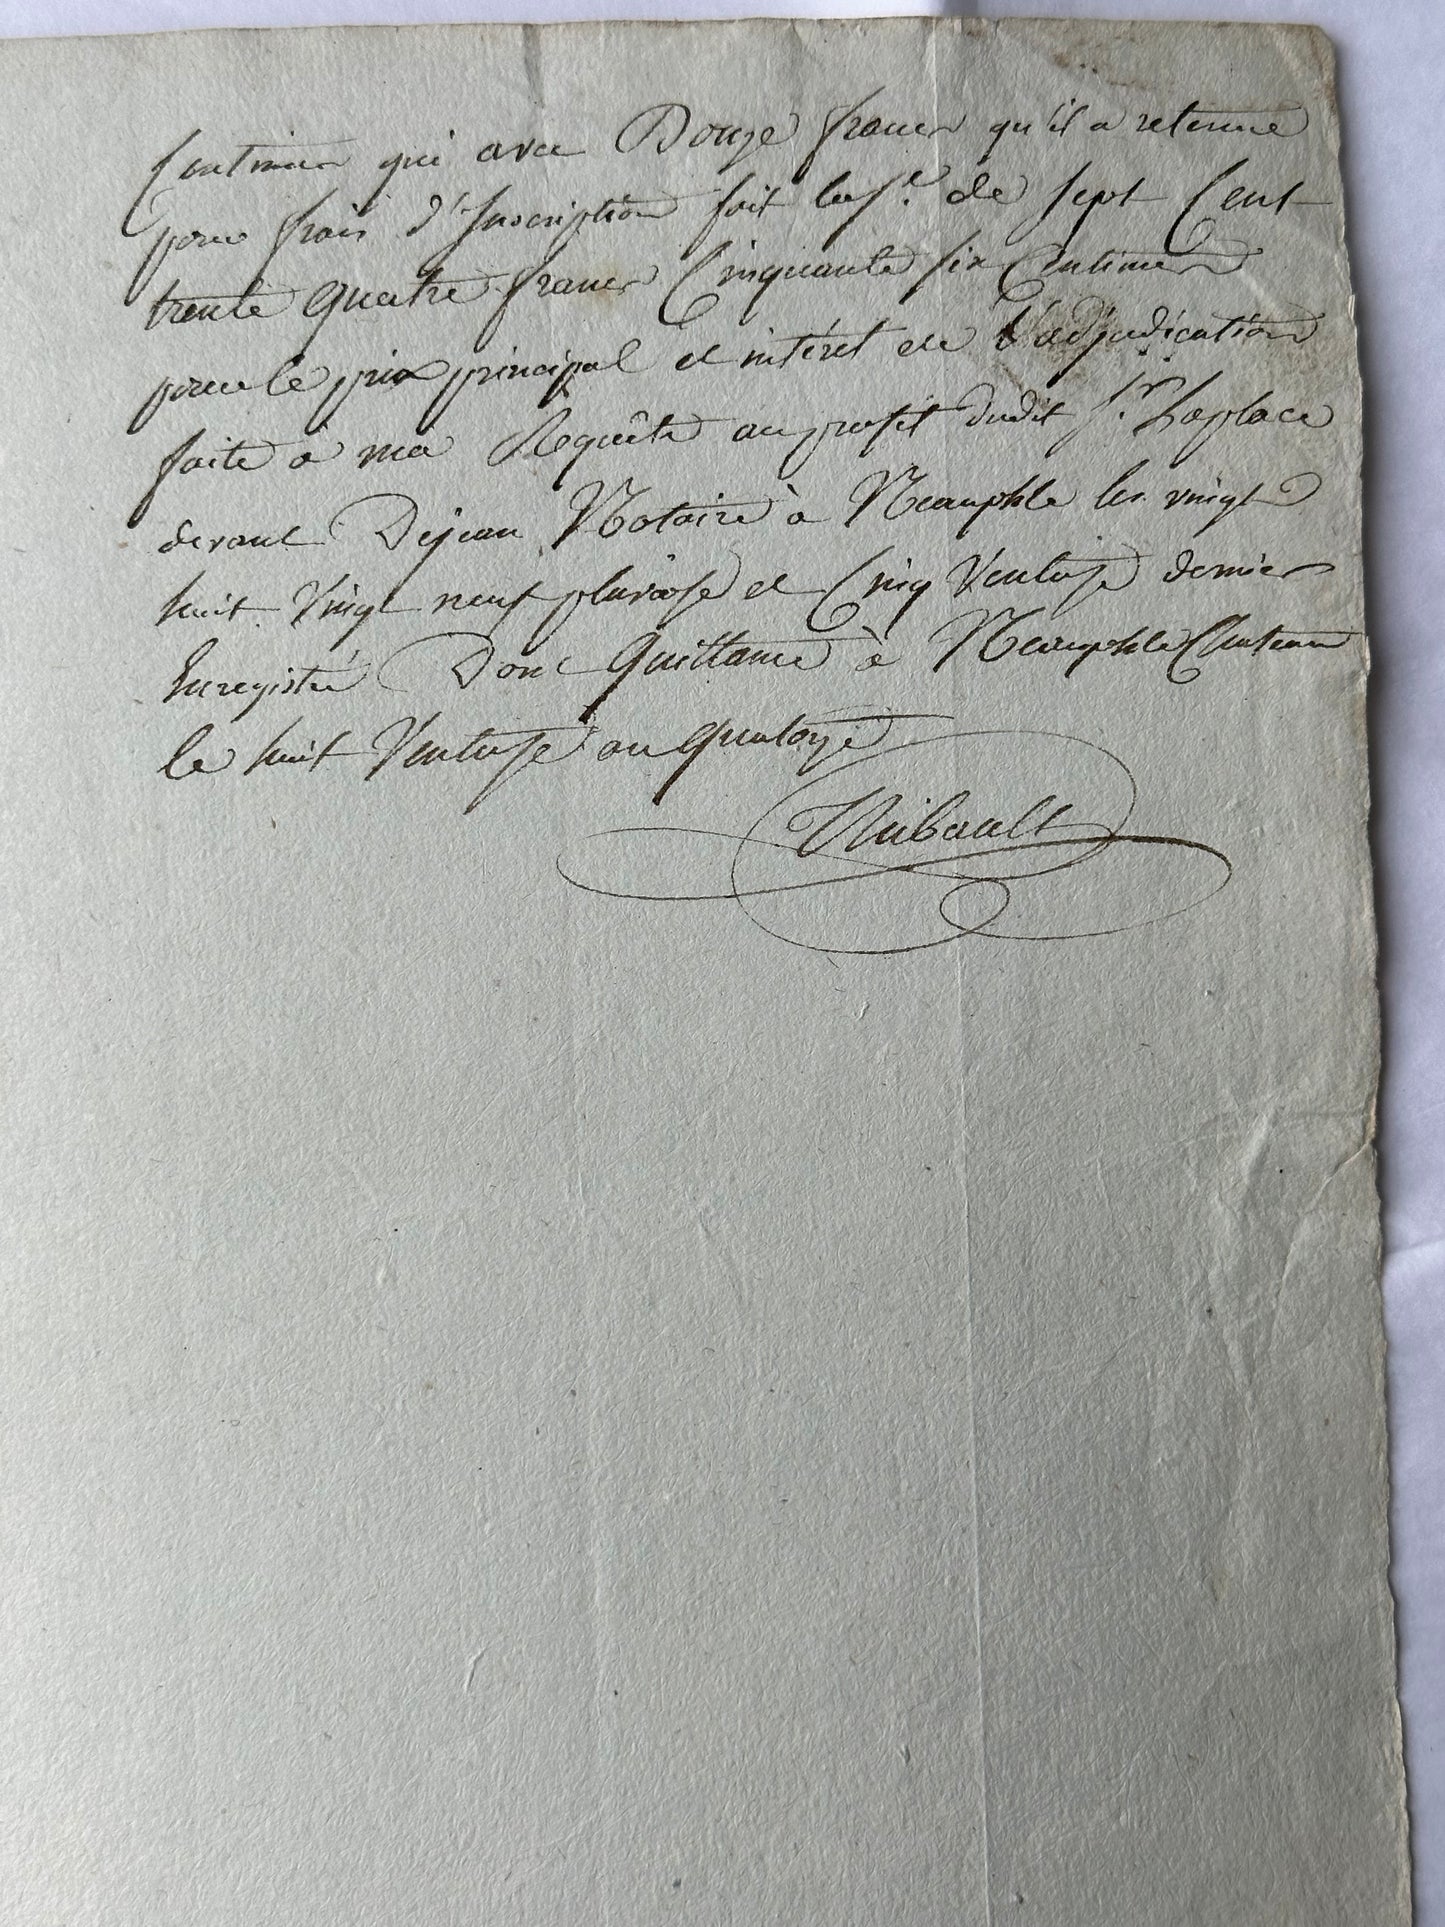 1805 French Legal Manuscript